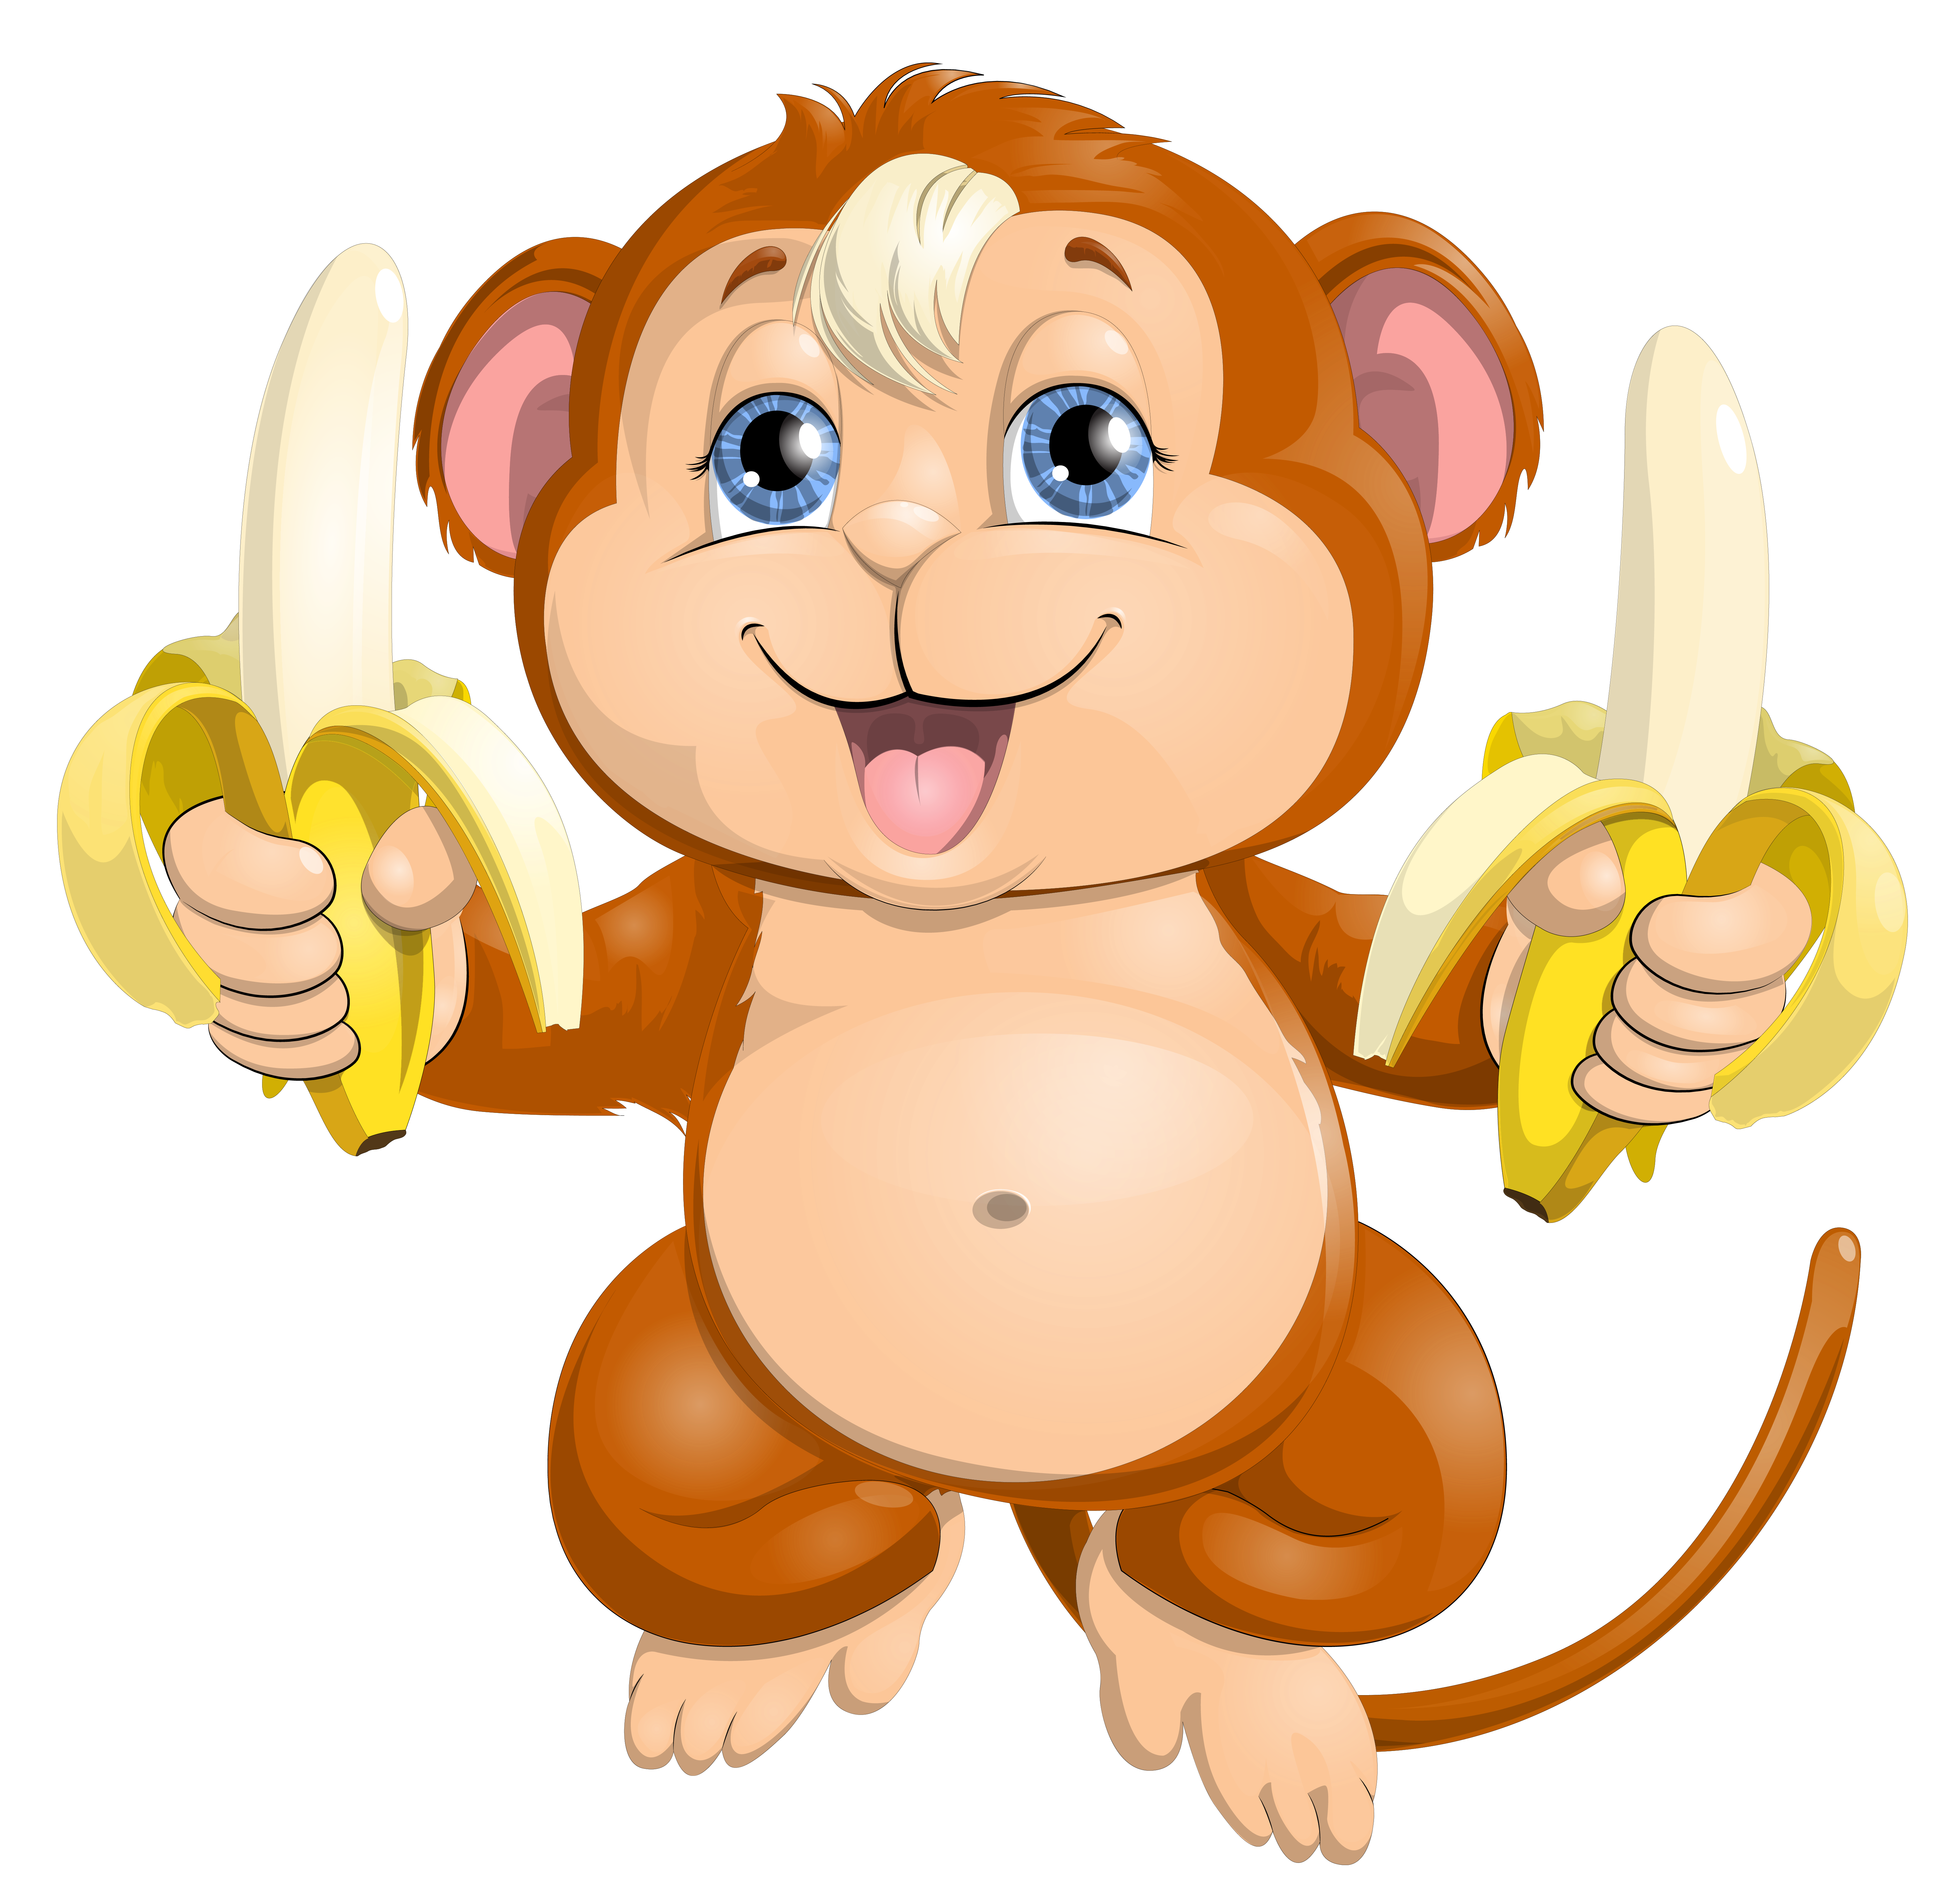 Cute monkey with bananas. Lion clipart ear